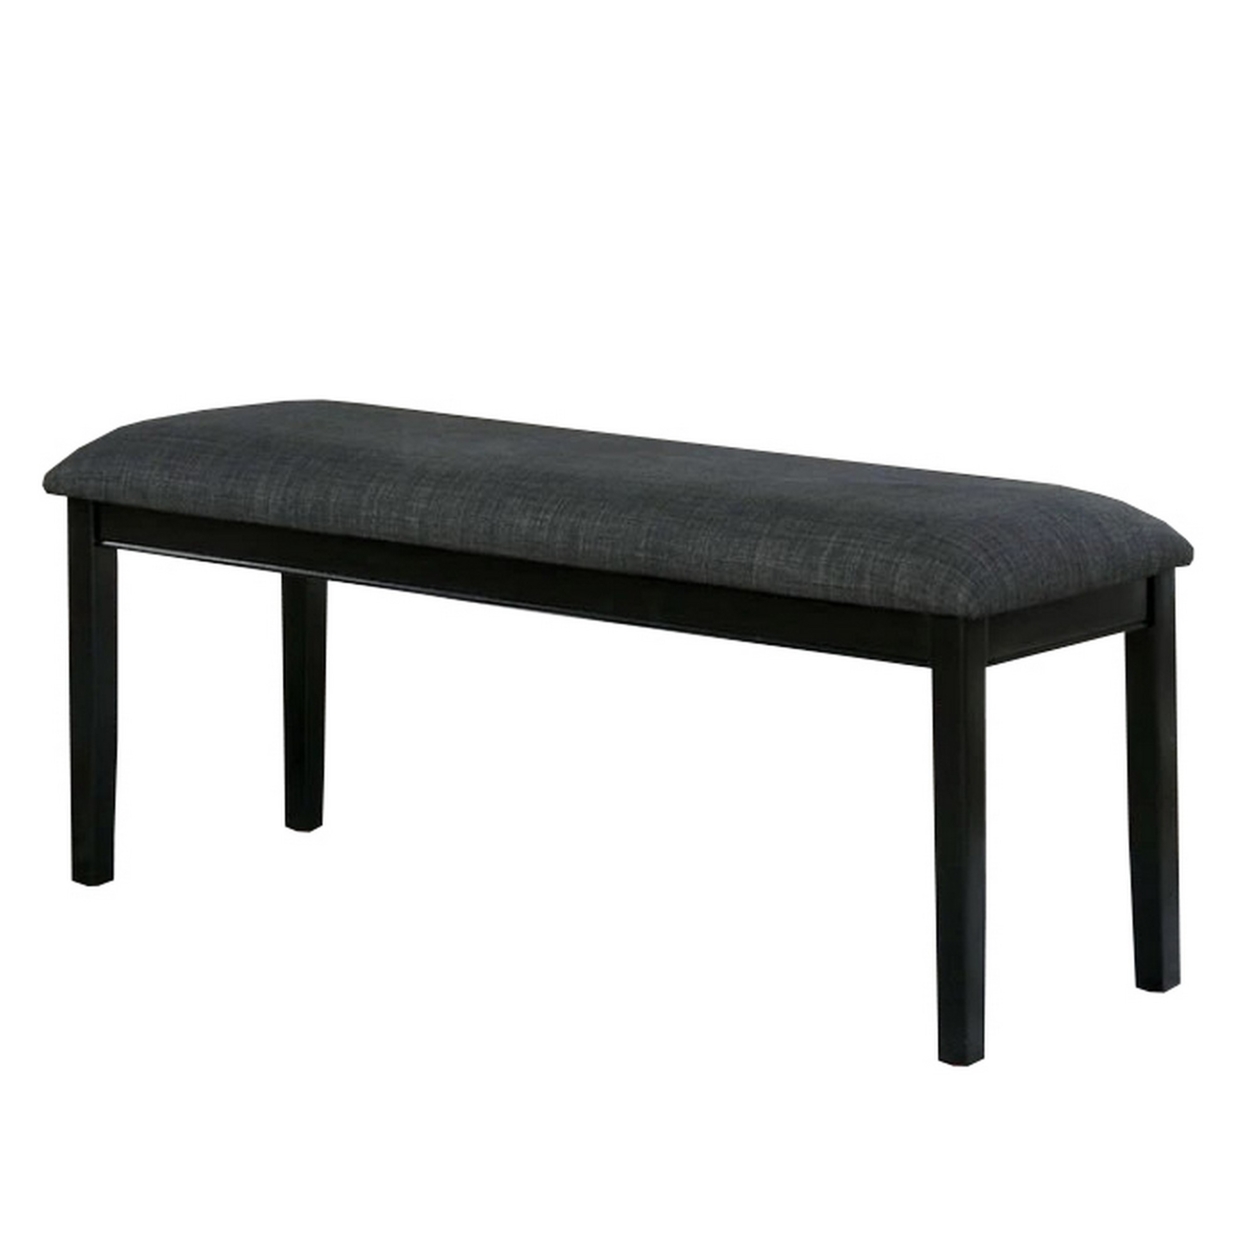 Fabric Seat Bench With Wooden Sleek Block Legs, Black And Gray- Saltoro Sherpi